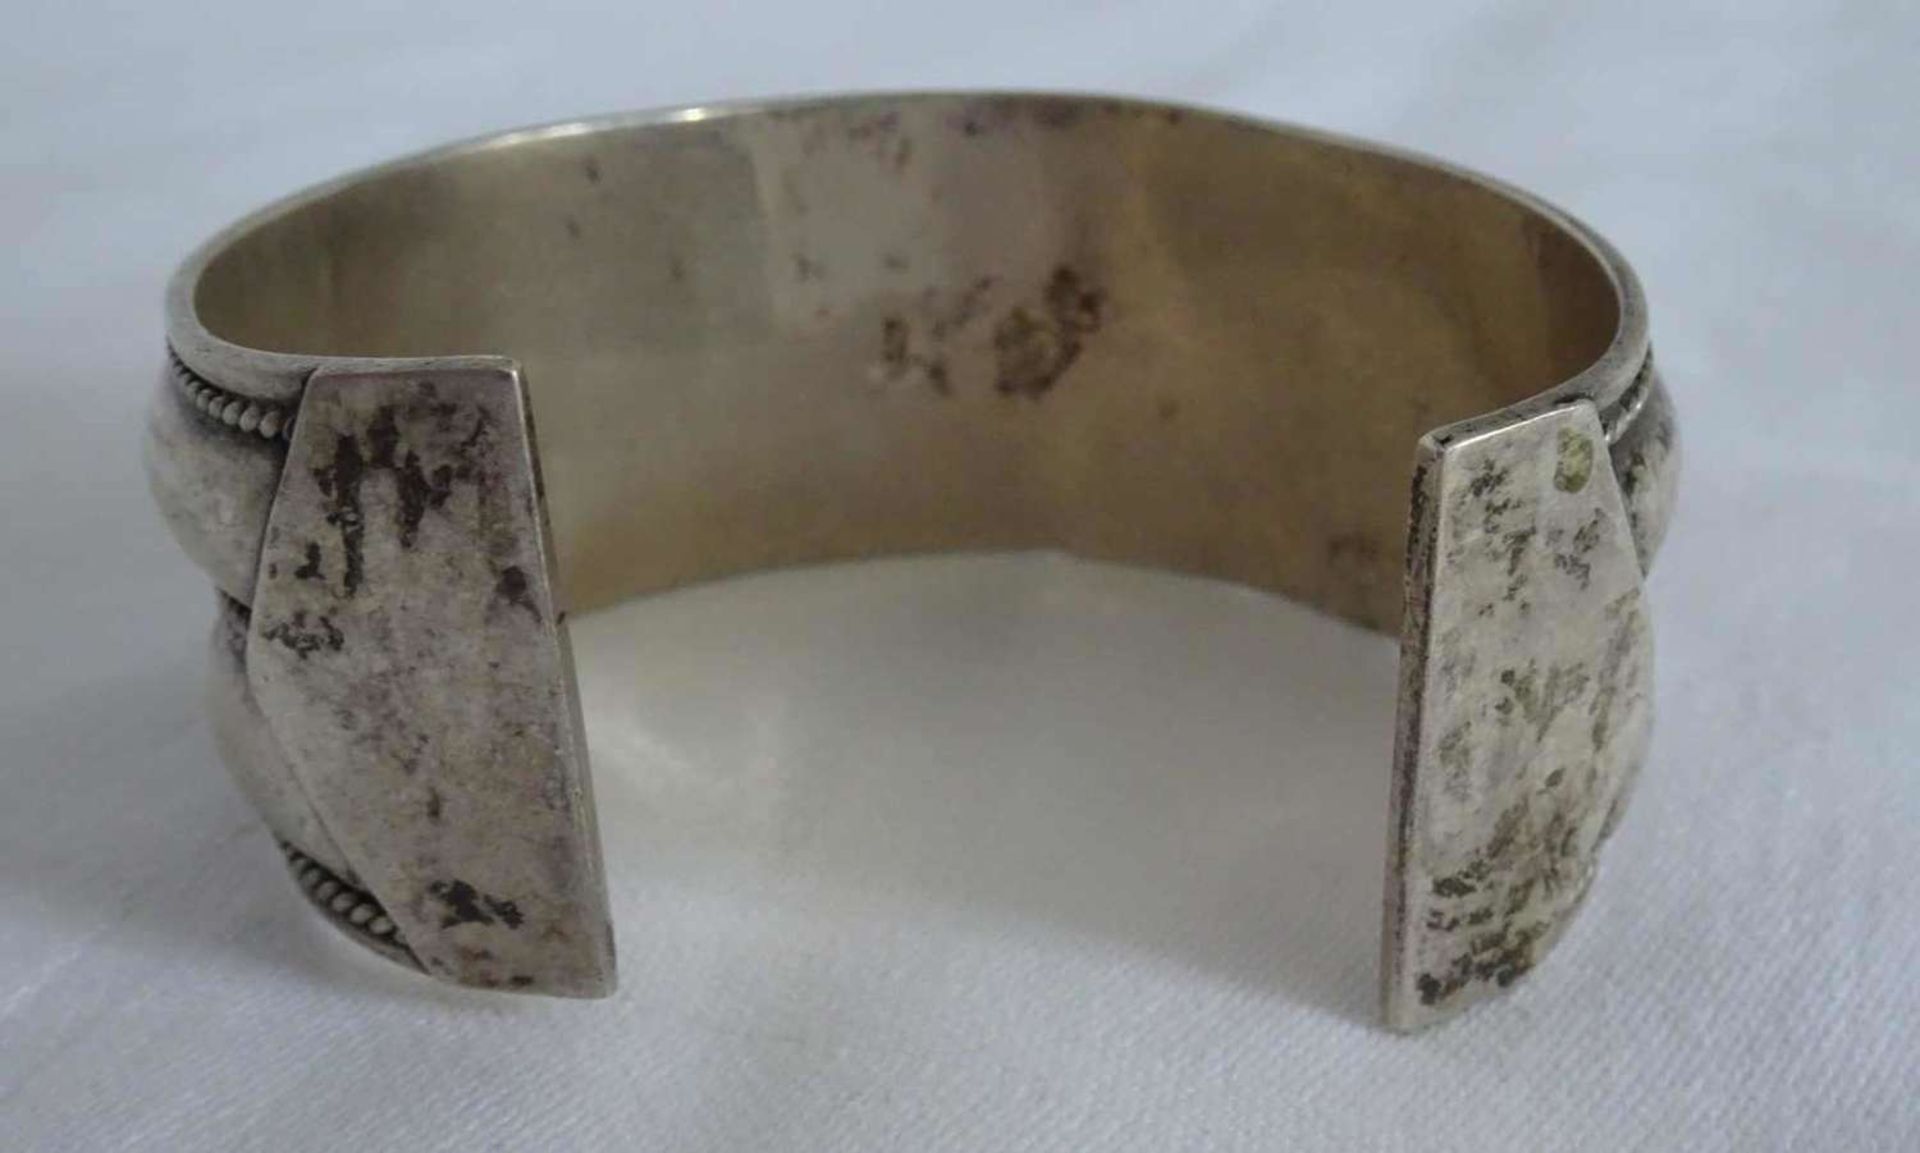 Armreif, 925er Silber, offene Ringschiene. Gewicht ca. 50 gr. Bangle, 925 silver, open ring band. - Image 4 of 4